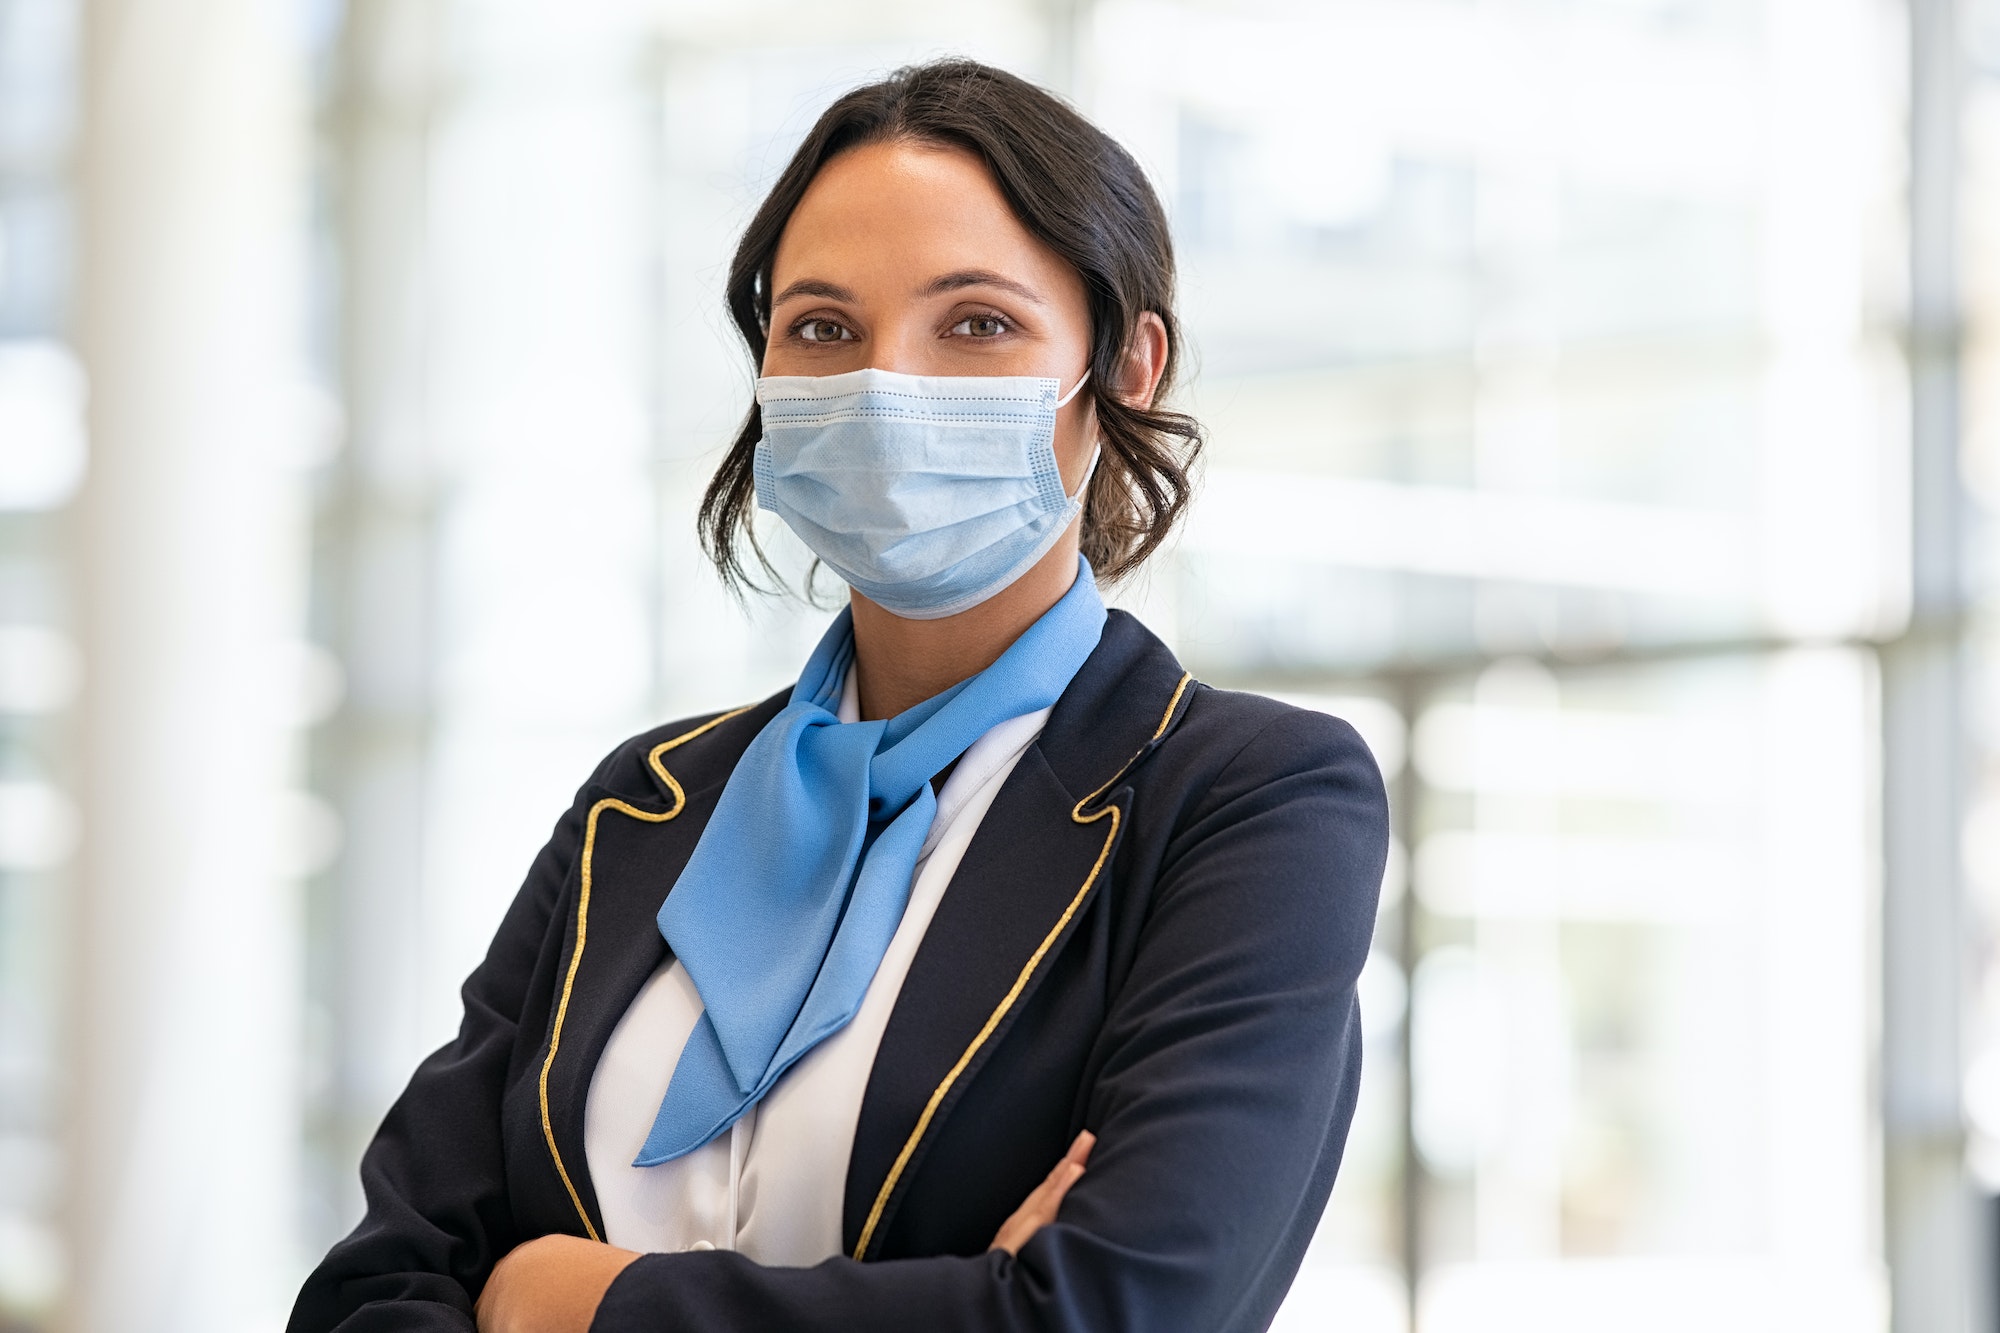 Air hostess wearing face mask during virus pandemic